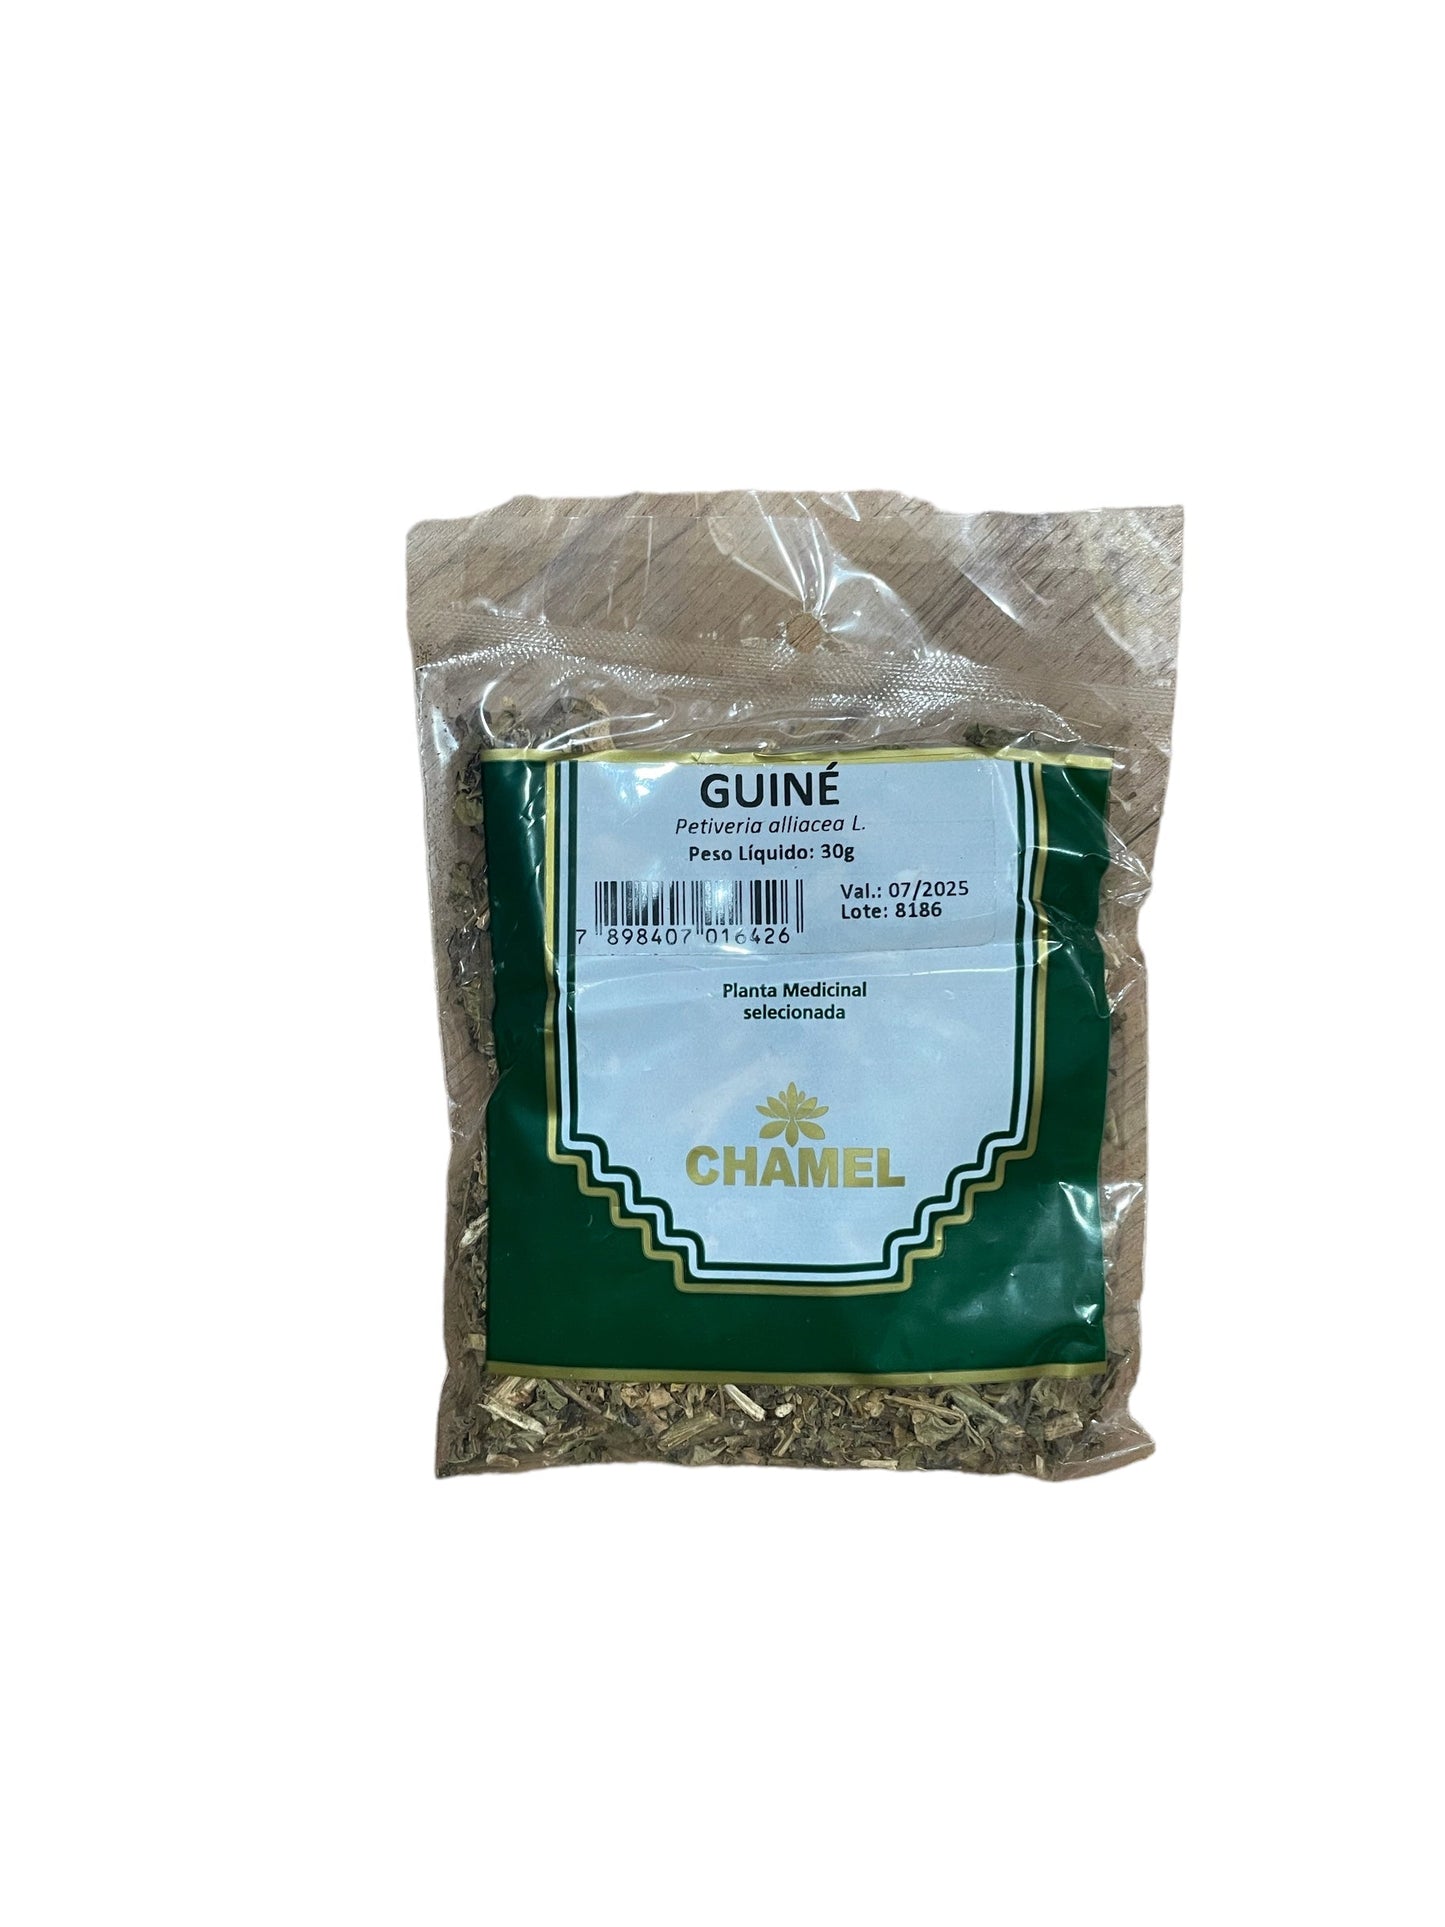 Chamel Chá de Guiné 30g